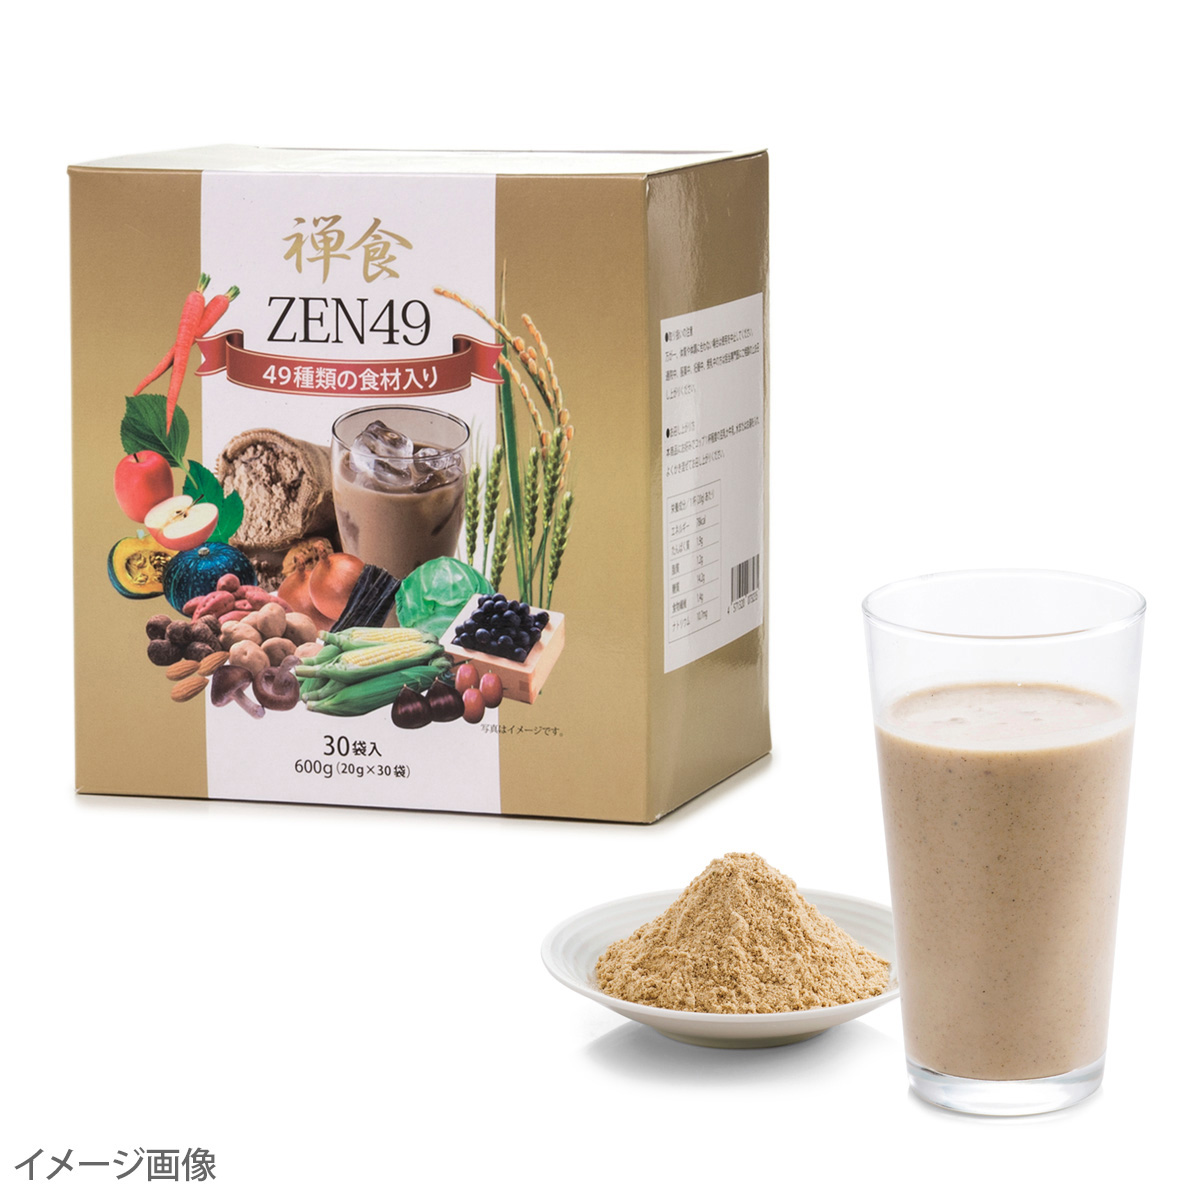 ZEN ダイエット禅食 お得な2箱セット シェイカー付き   QVC.jp